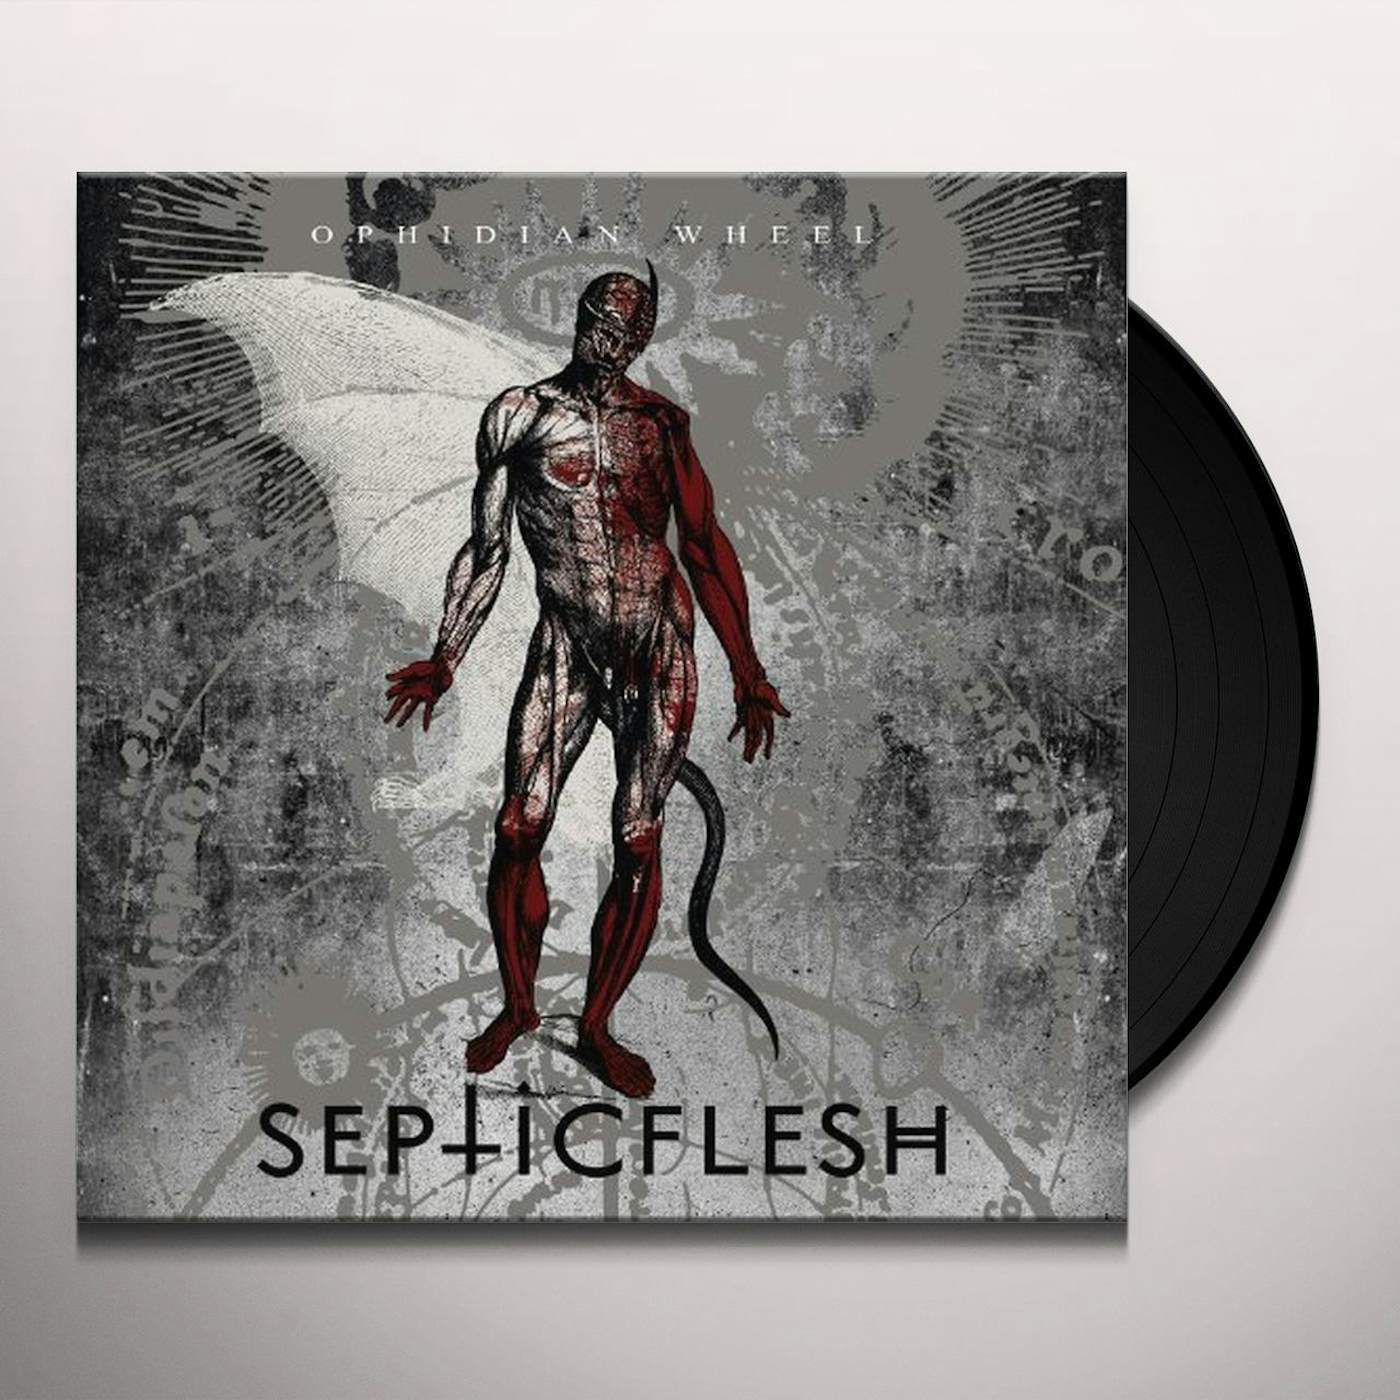 Septicflesh Ophidian Wheel Vinyl Record